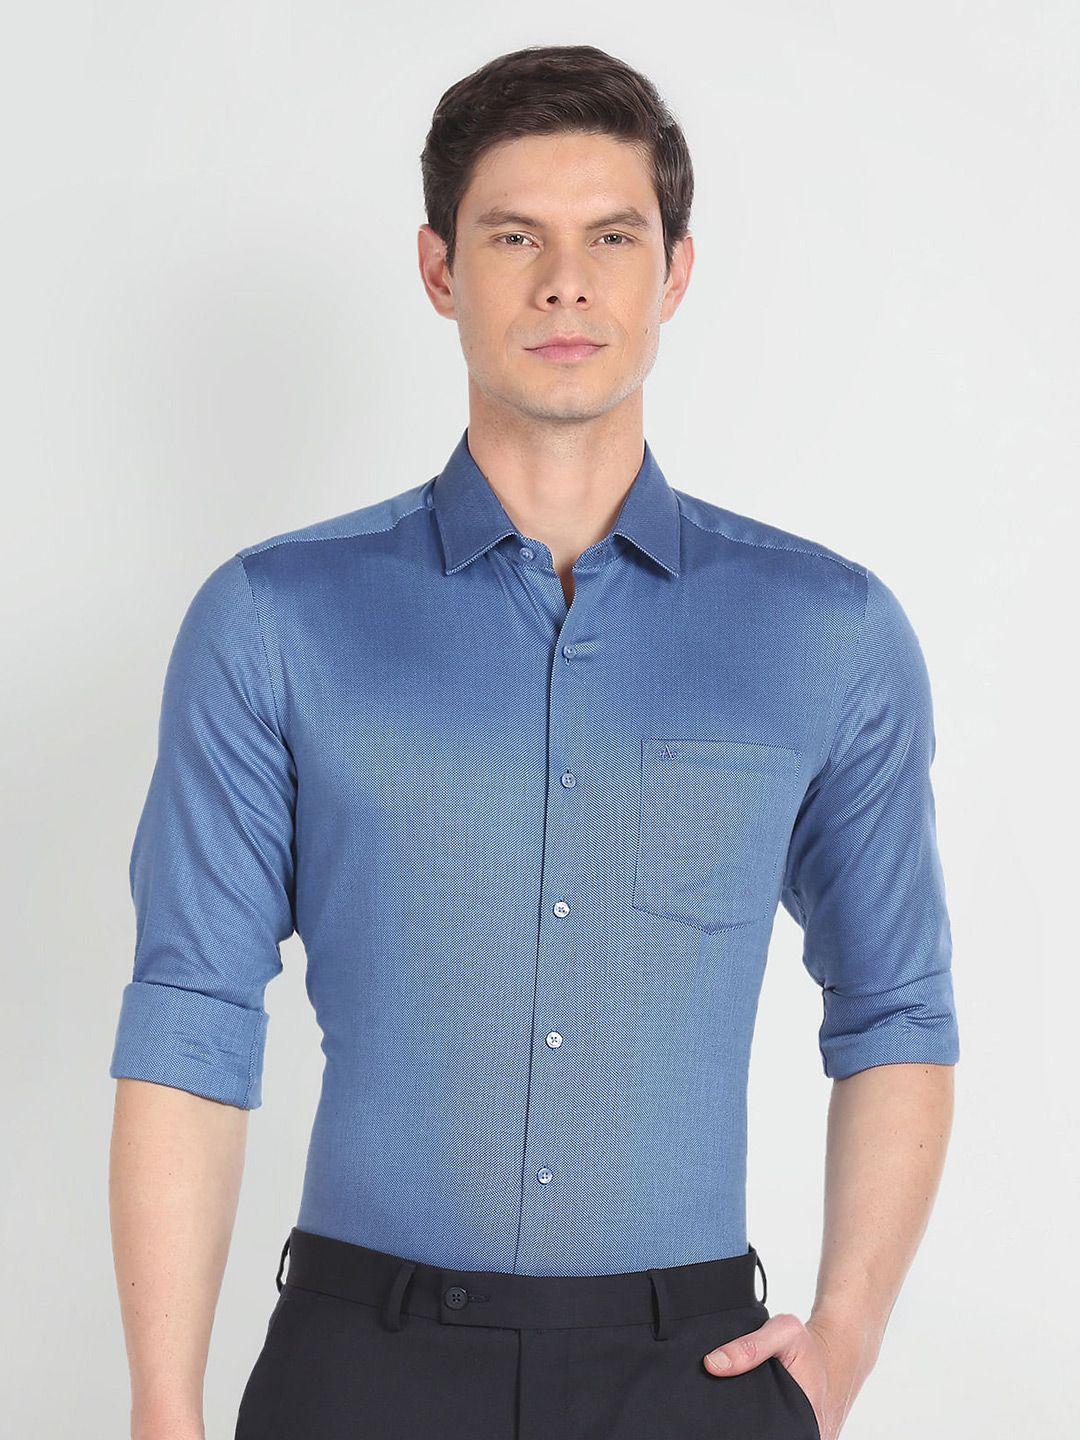 arrow slim fit spread collar pure cotton formal shirt